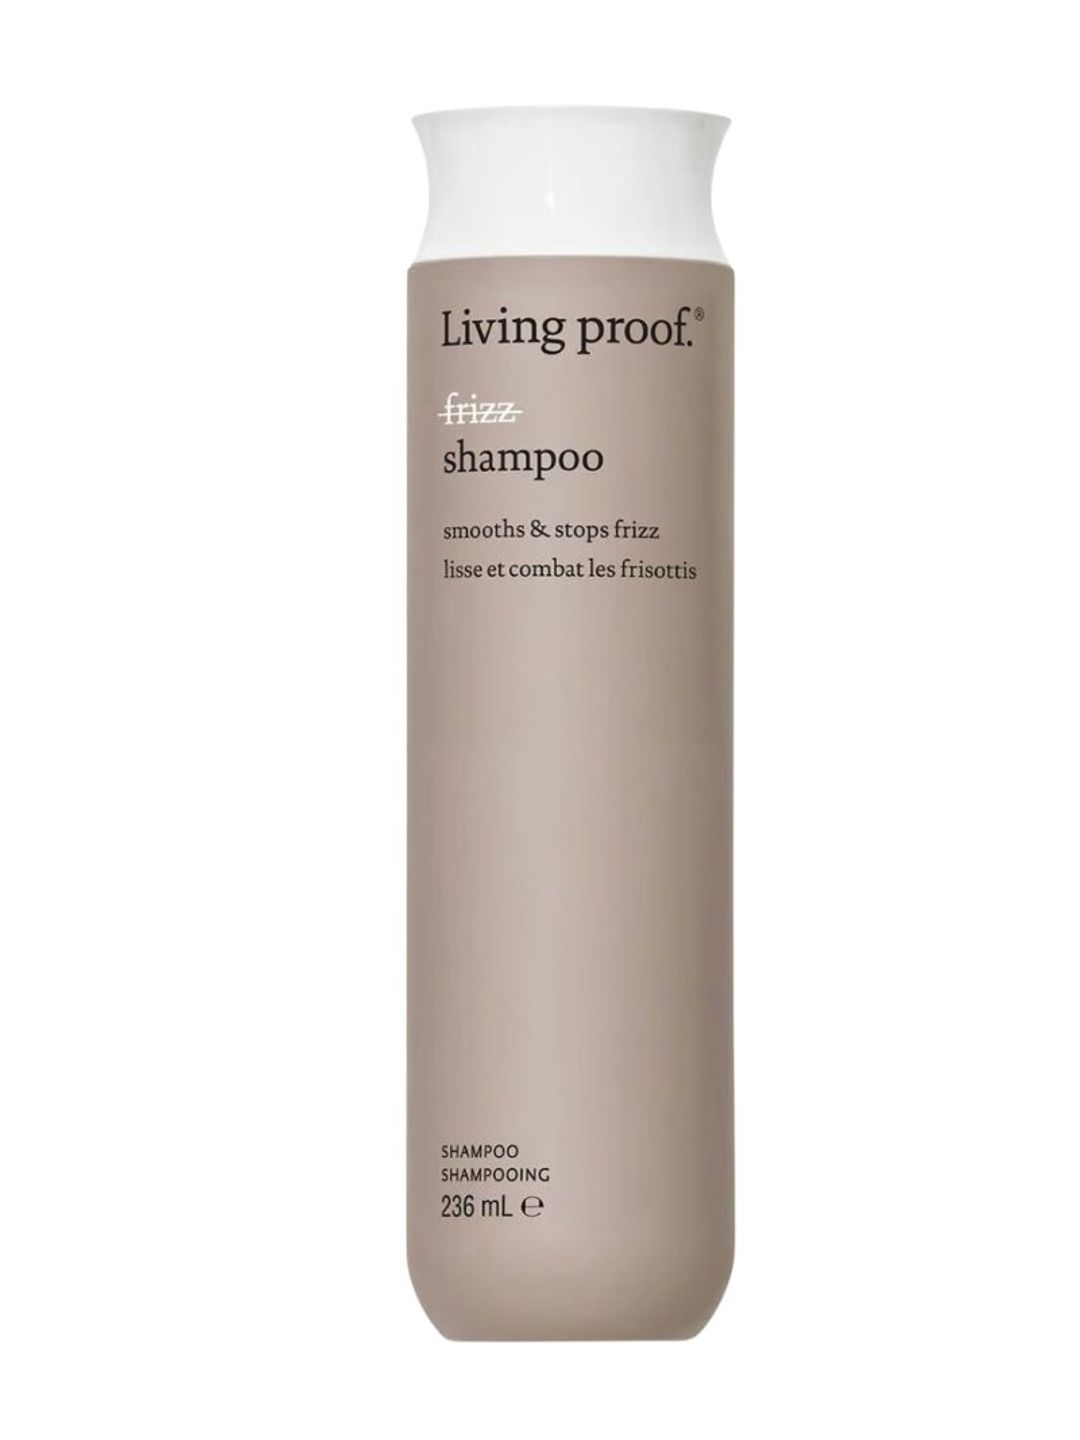 Living Proof shampoo bottle 